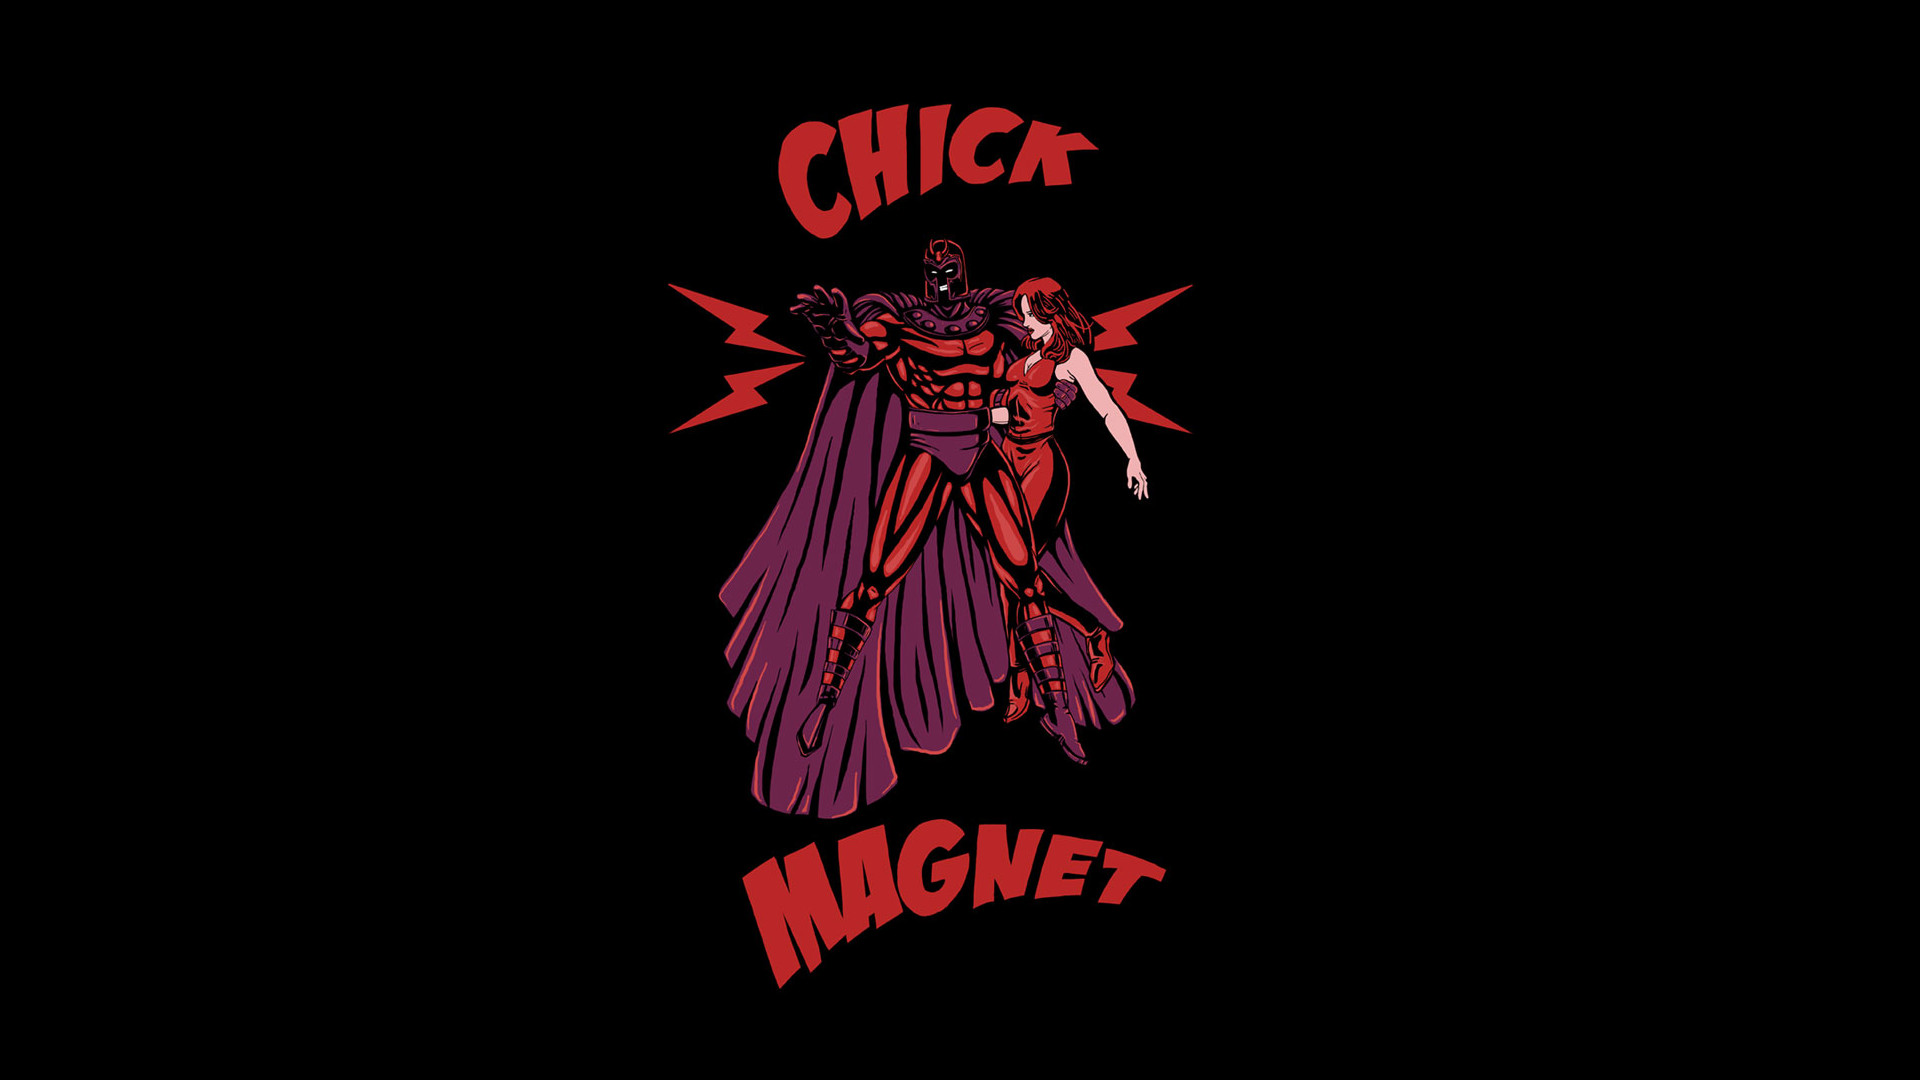 1920x1080 Magneto Chick Magnet